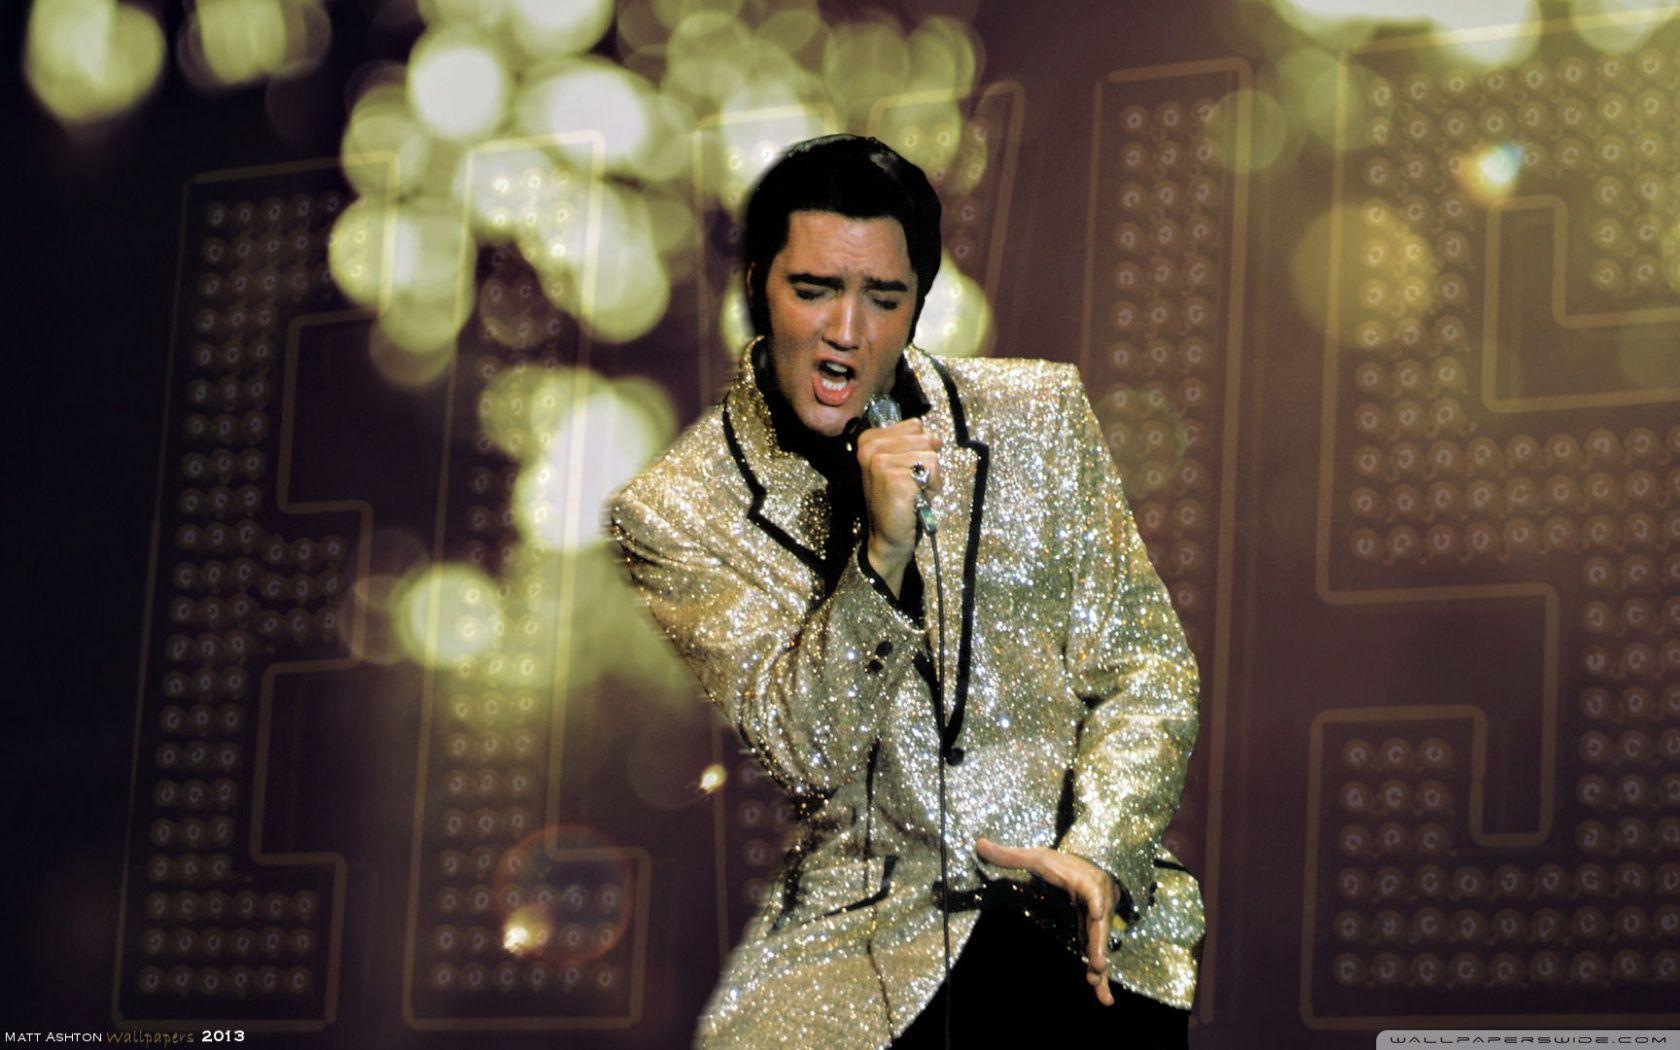 Elvis Presley Wallpaper 1680x1050 Free, PC Elvis Presley 1680x1050